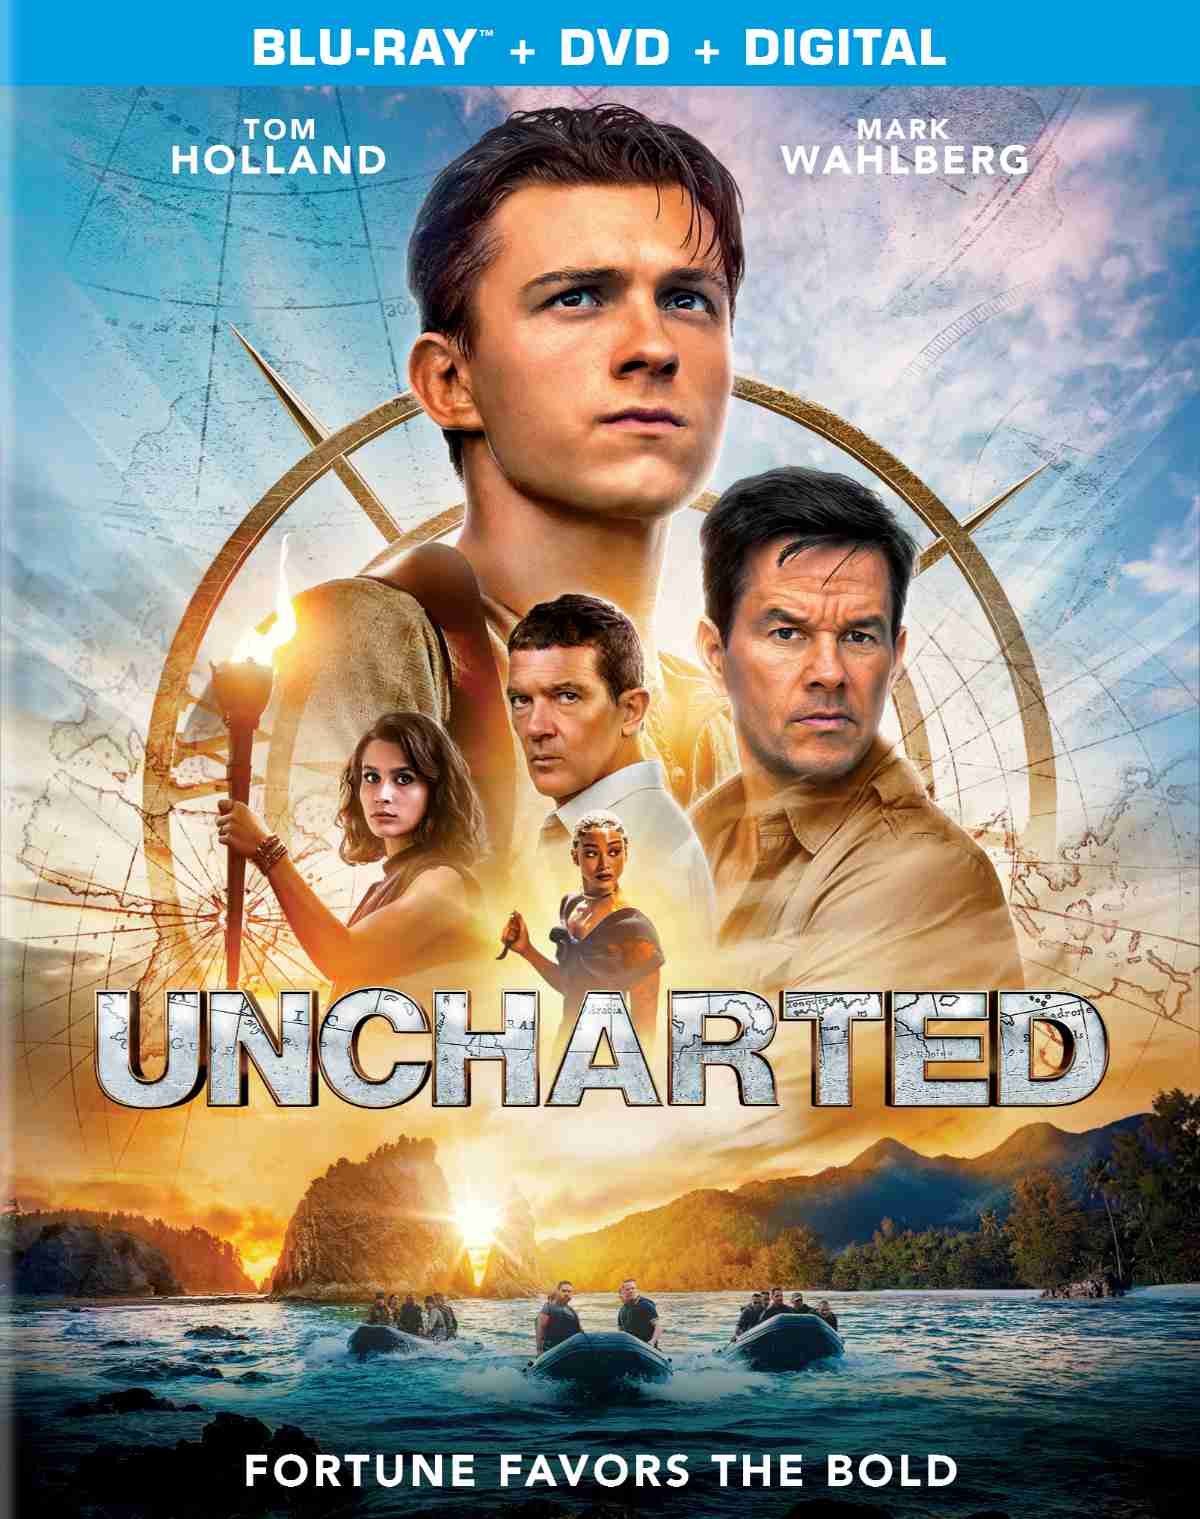 Uncharted Digital, 4K Ultra HD, Blu-ray and DVD